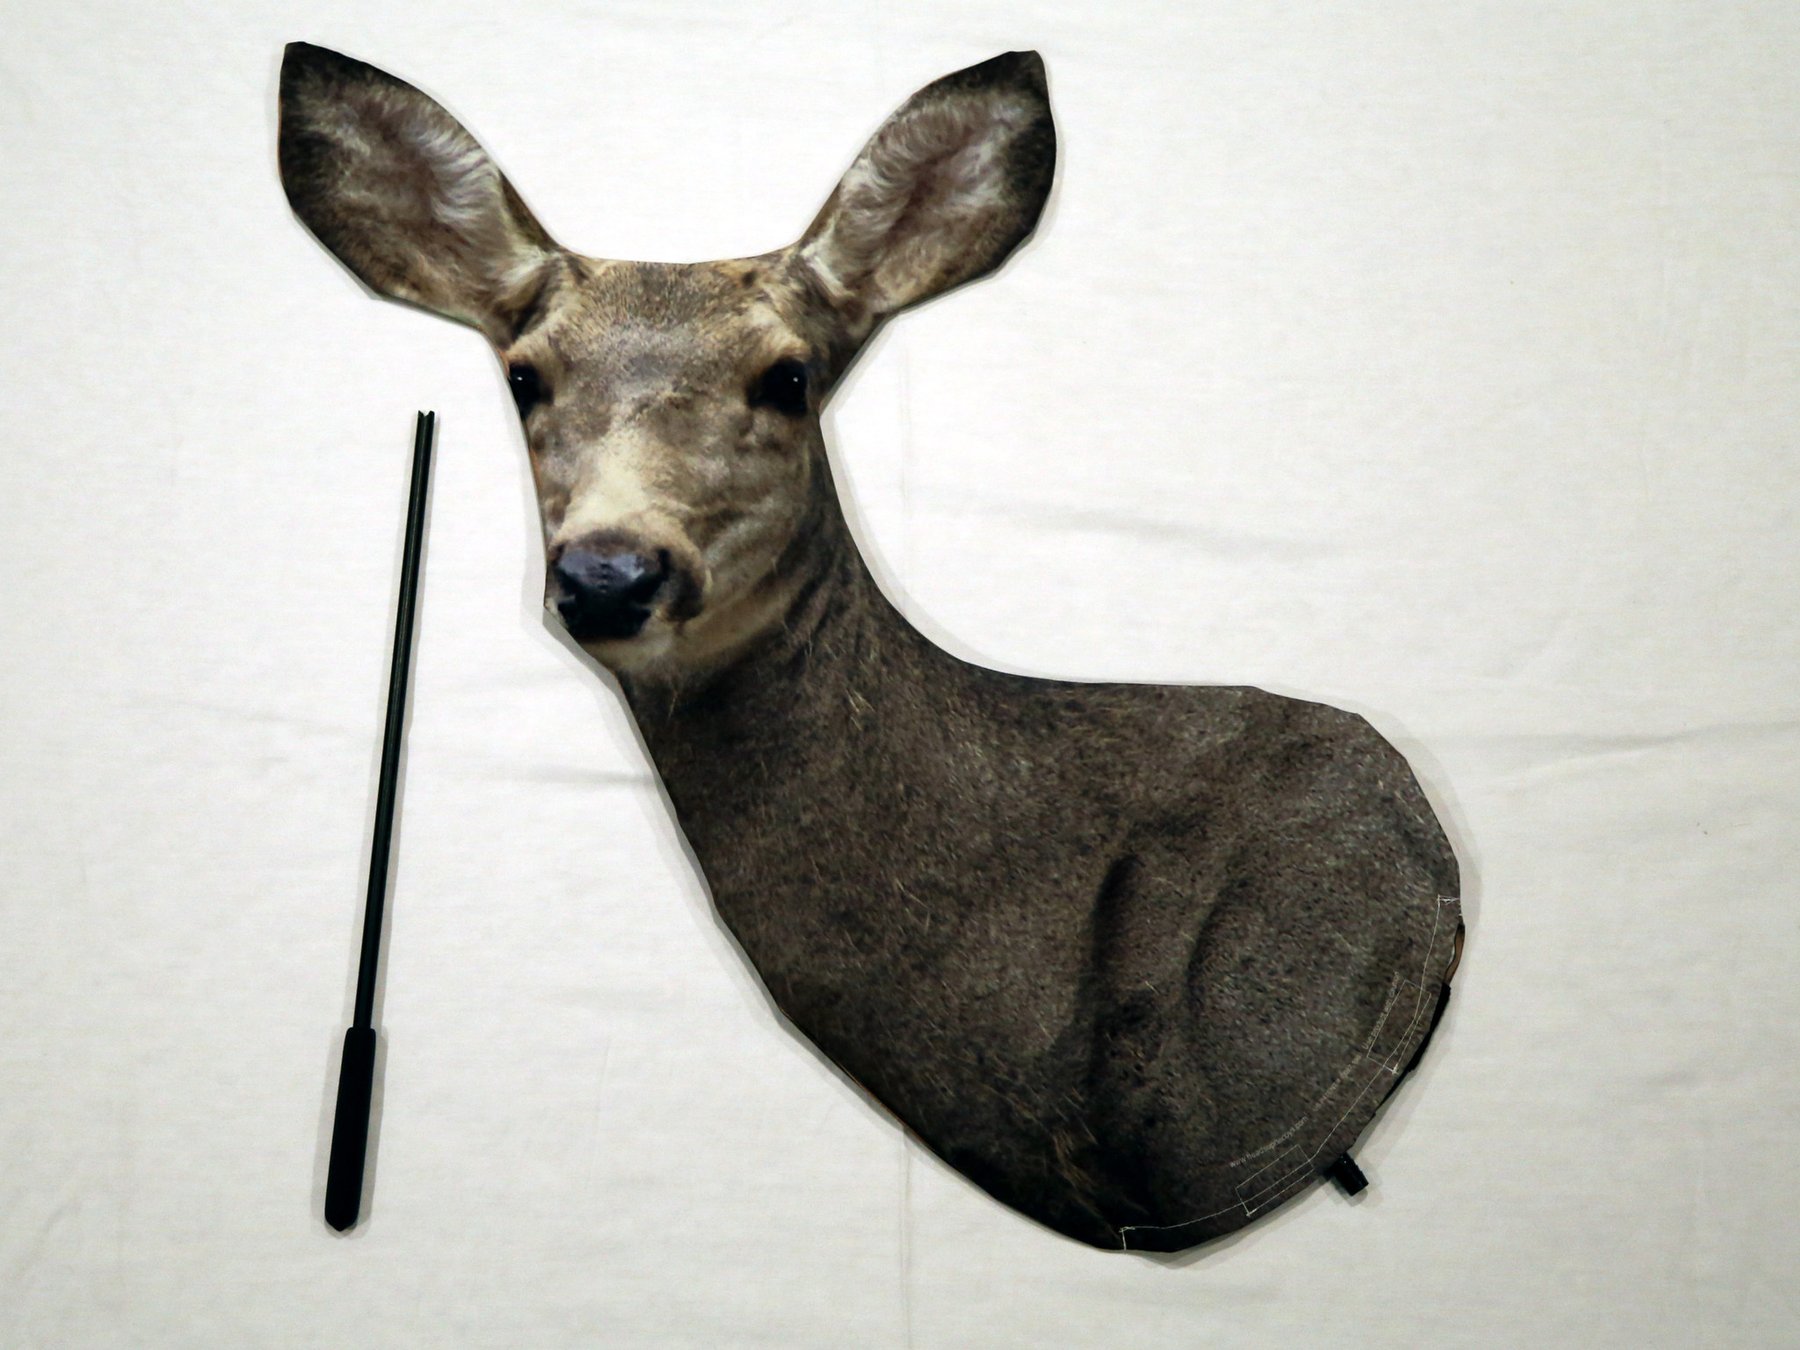 Archery Mule Deer Doe Decoy - Heads Up Decoy